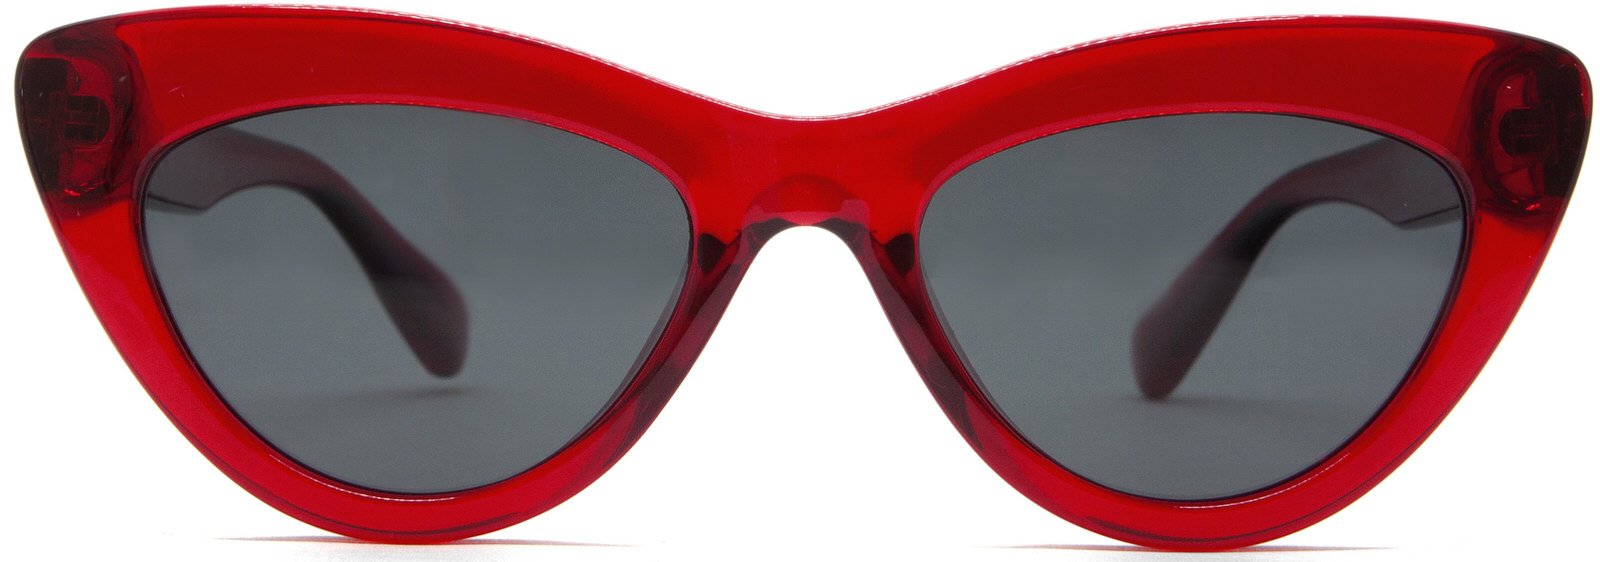 red frames eyewear trend